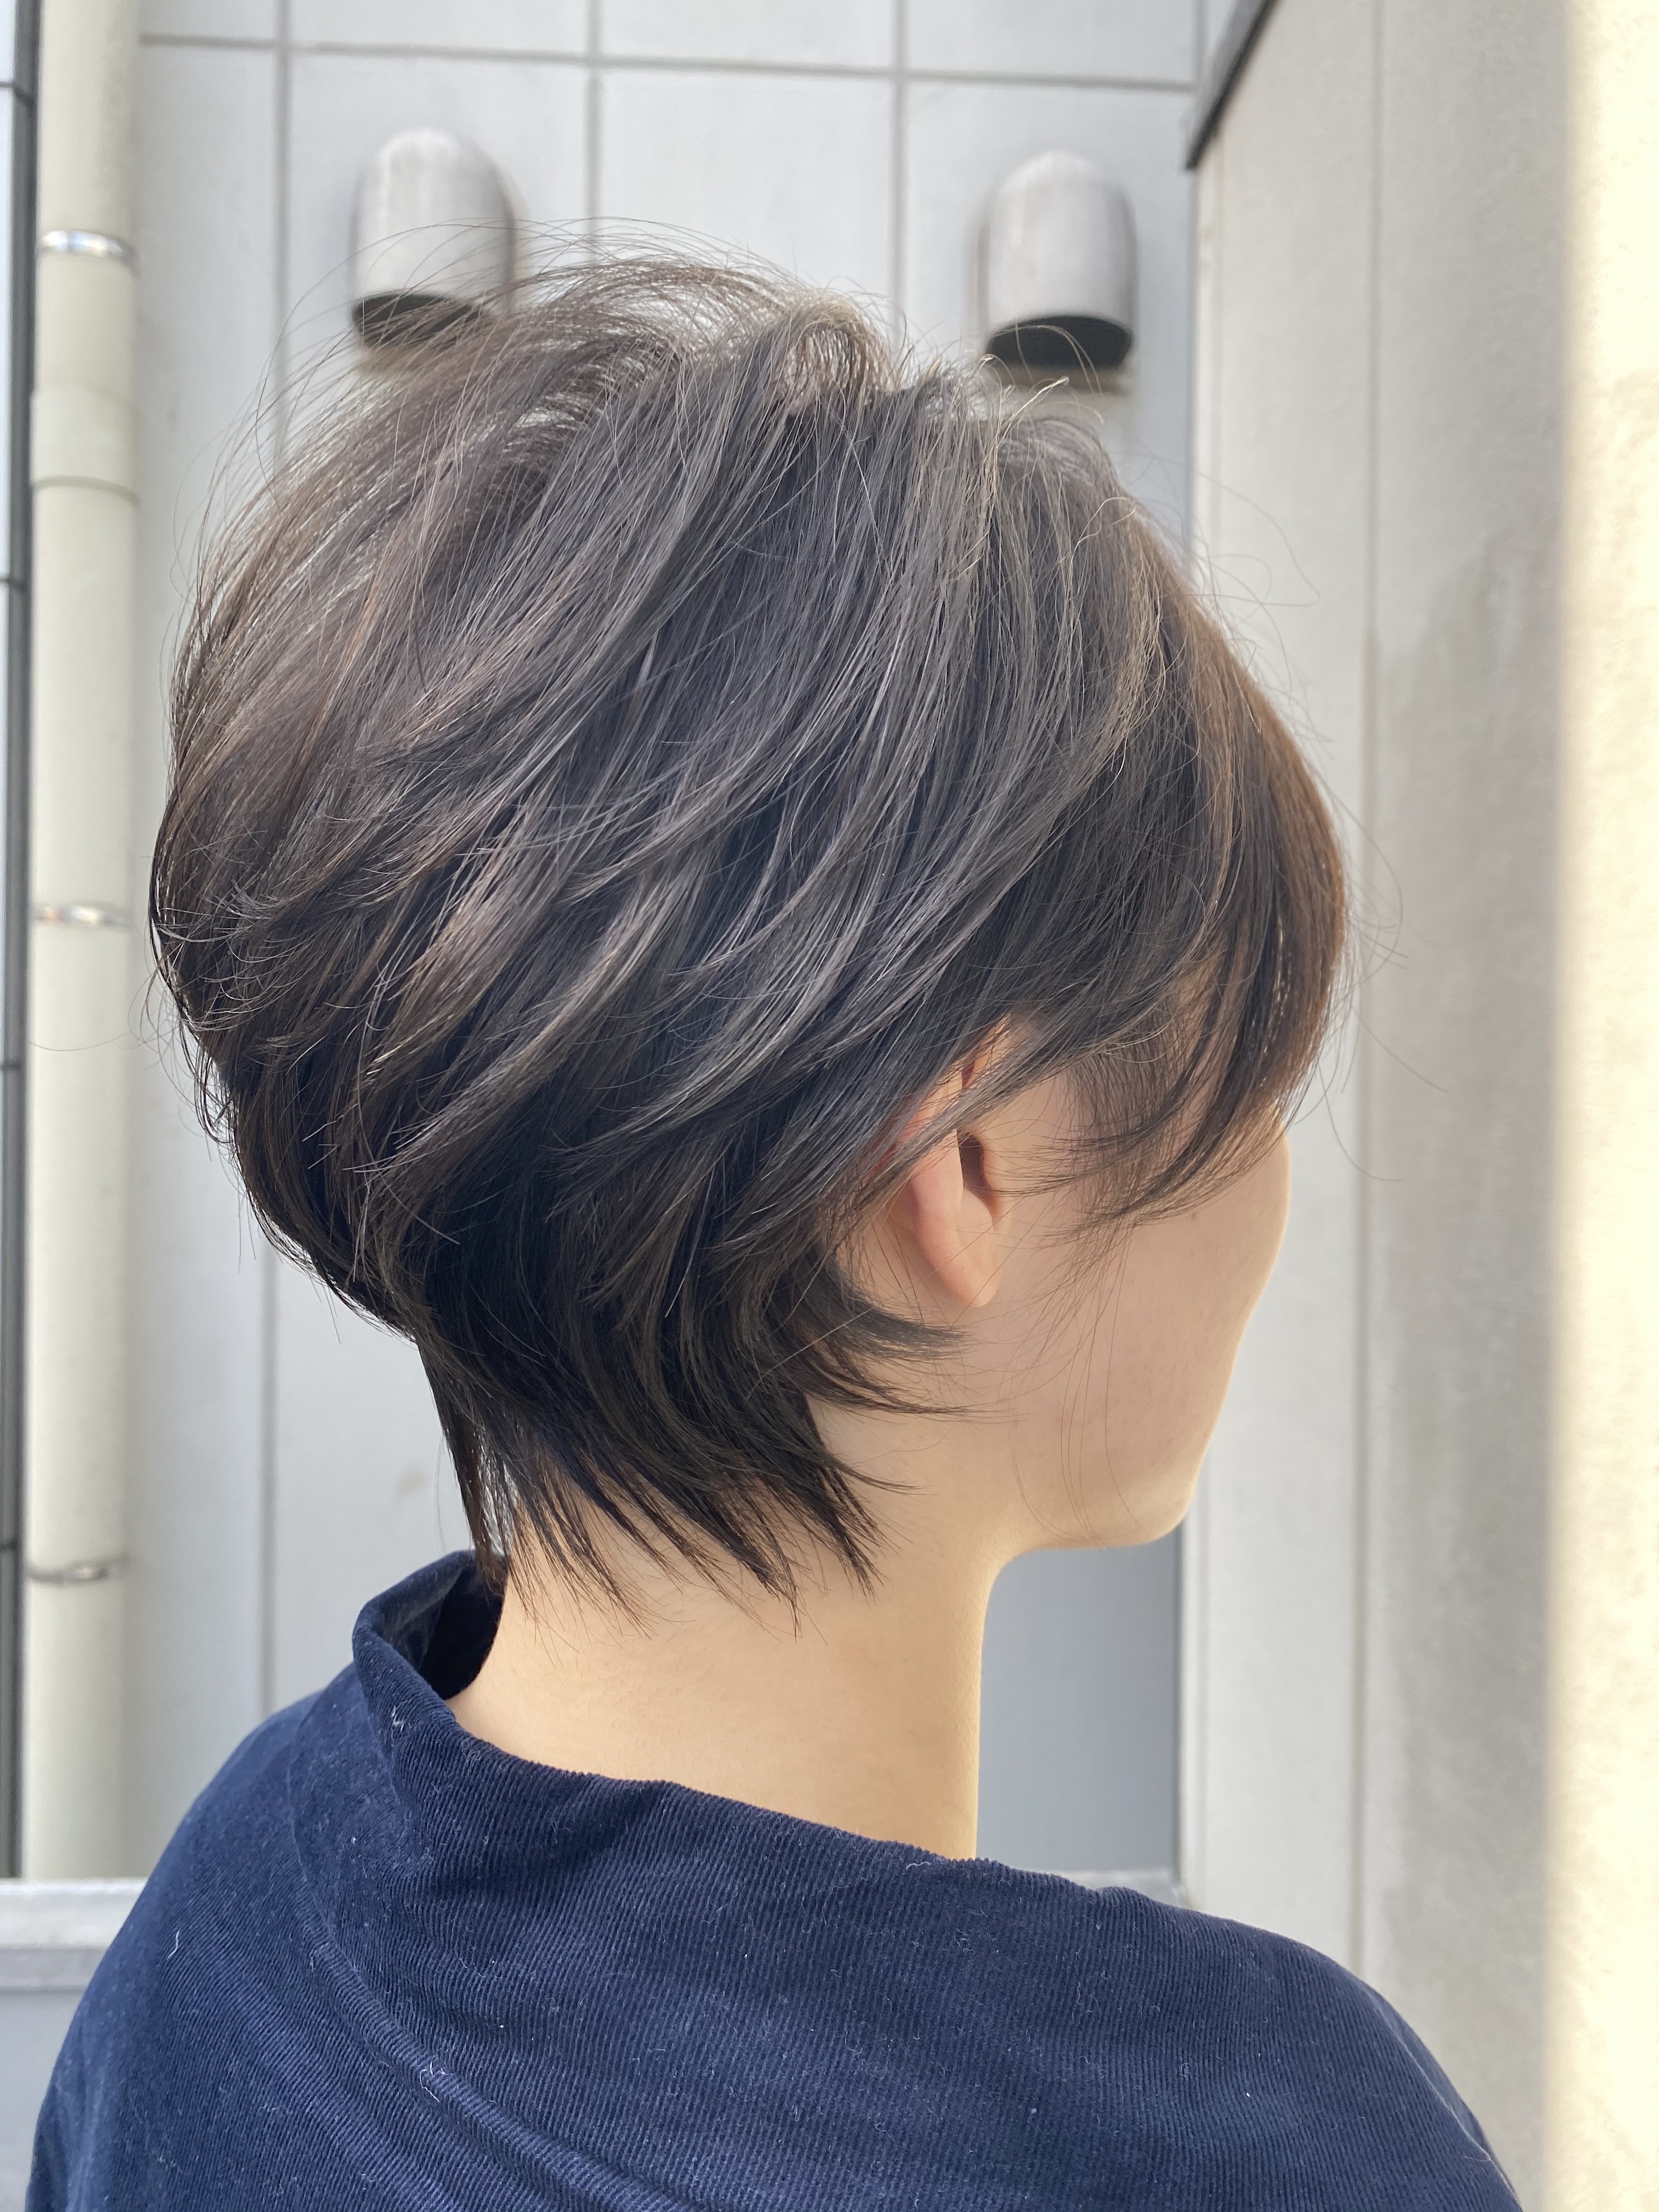 pace hair【パーチェヘアー】のスタイル紹介。ショートスタイル